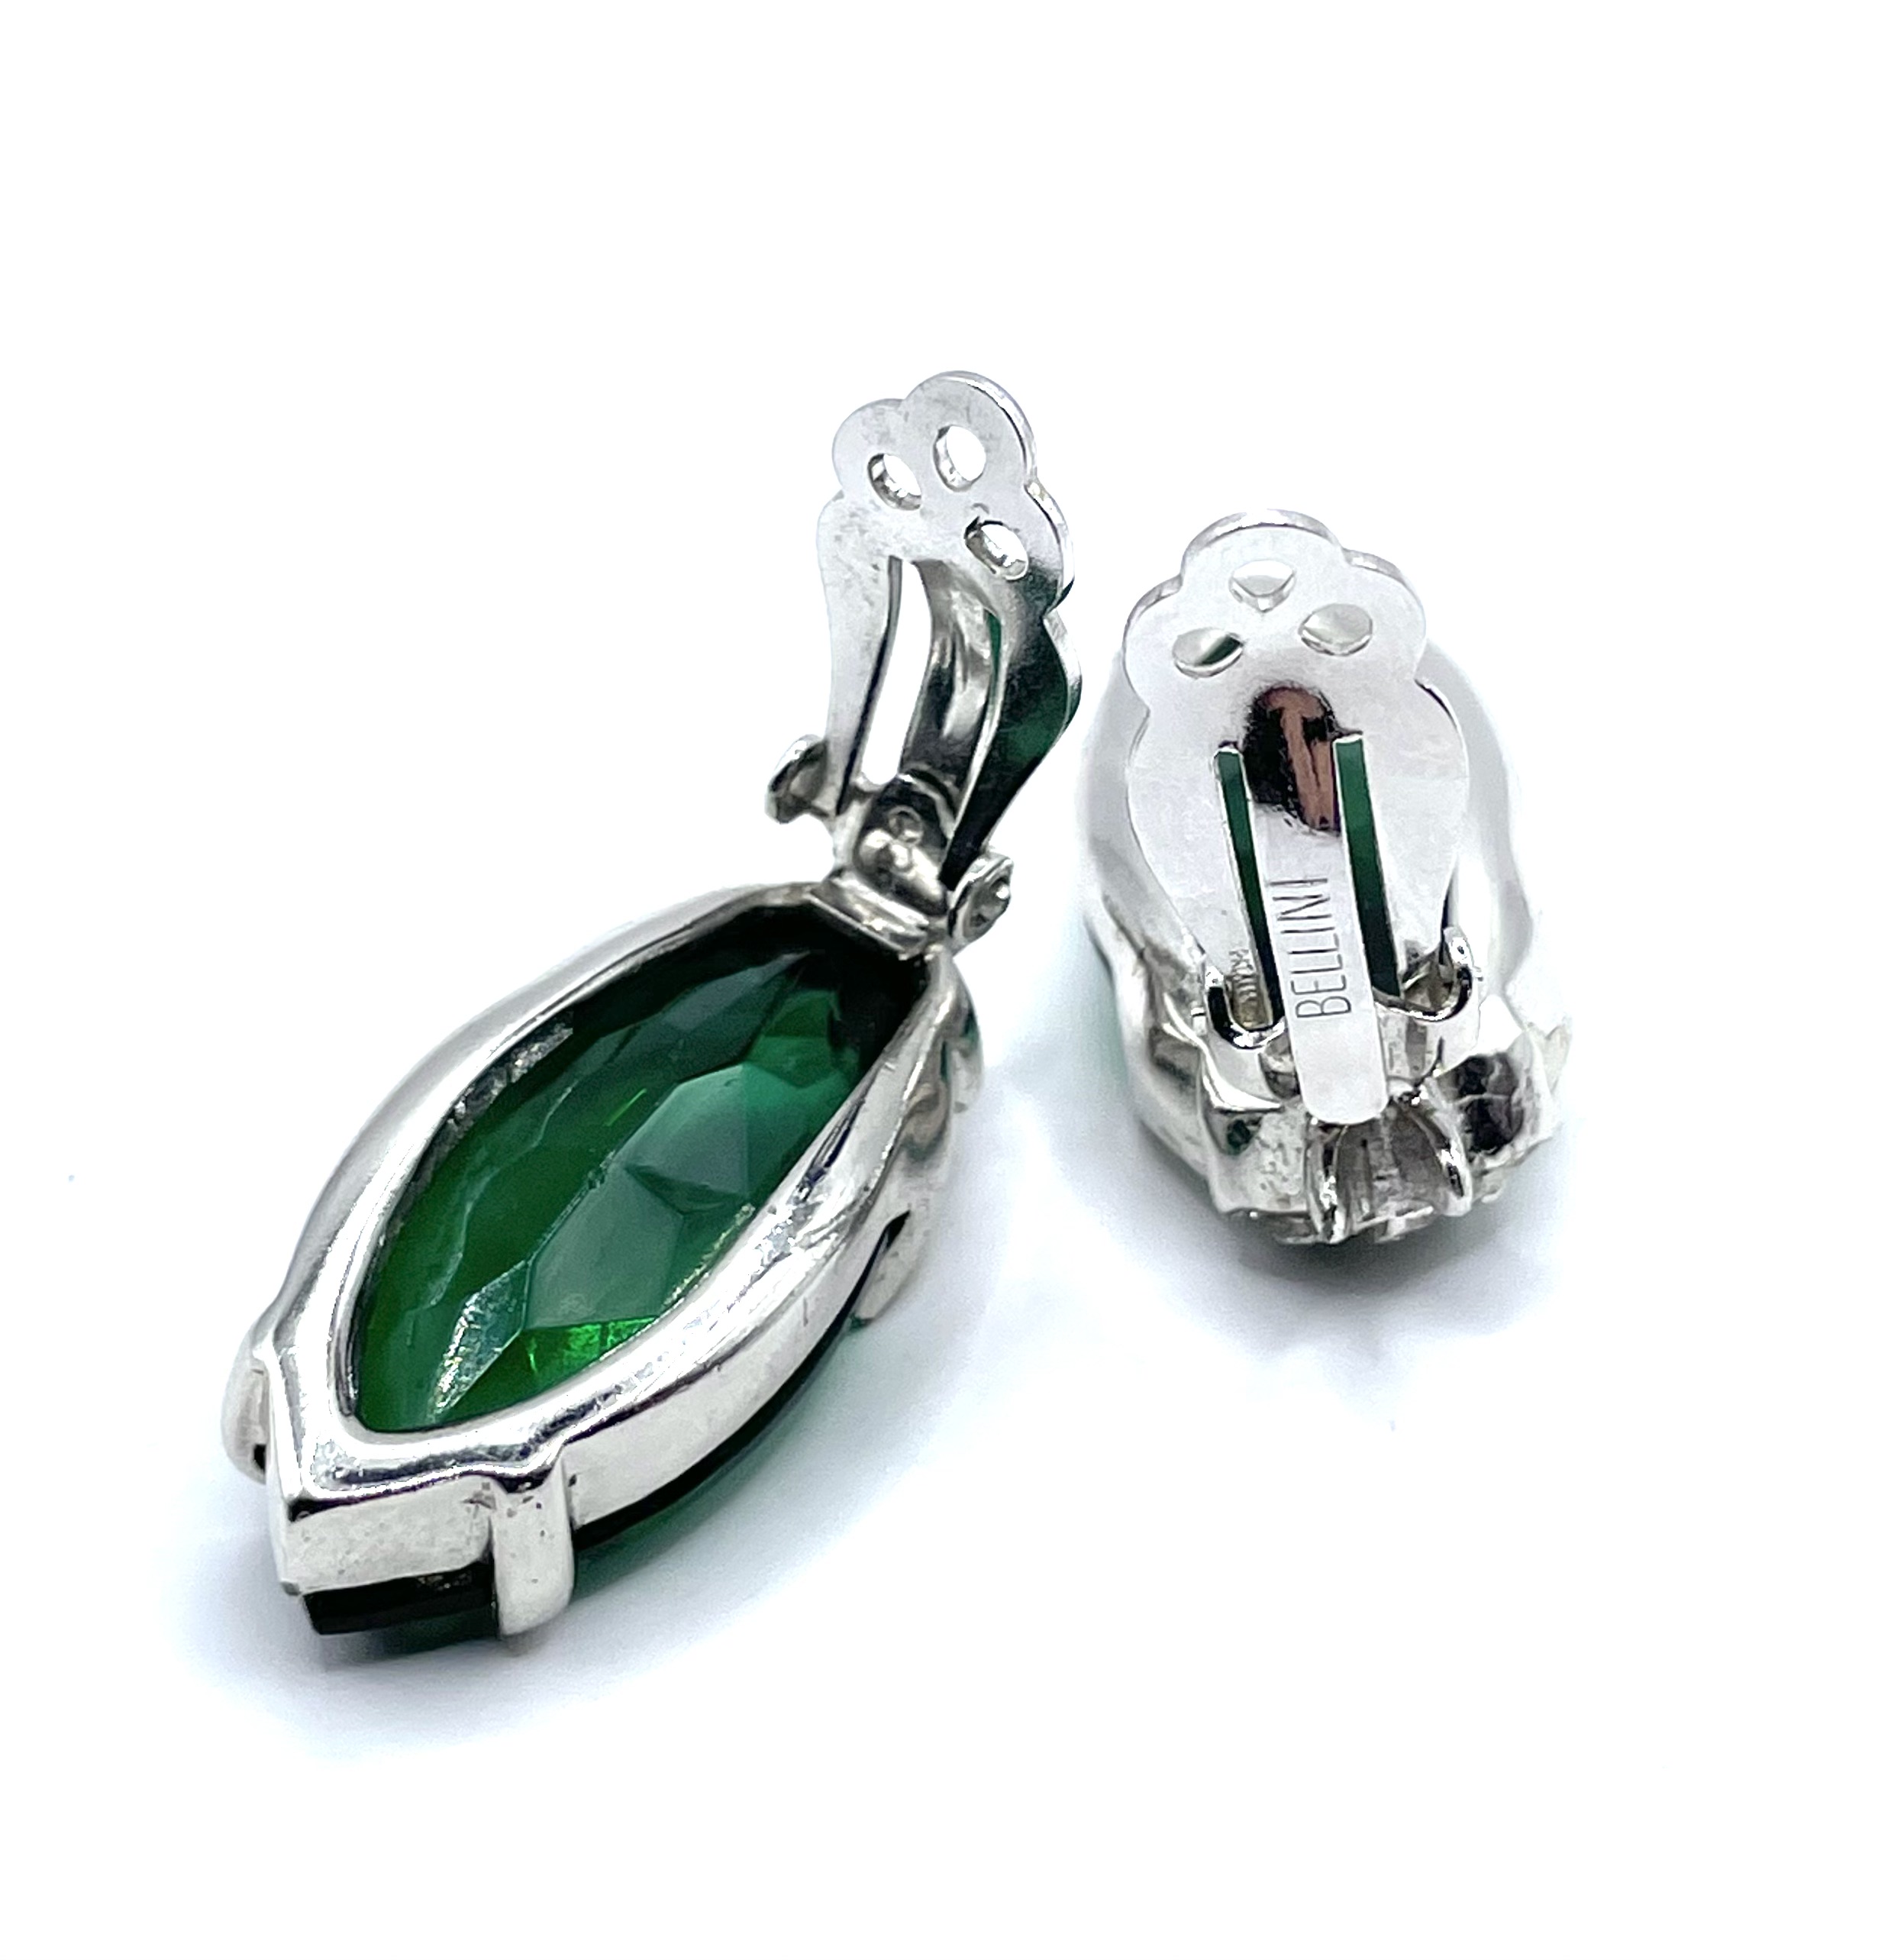 1950s green rhinestone earrings